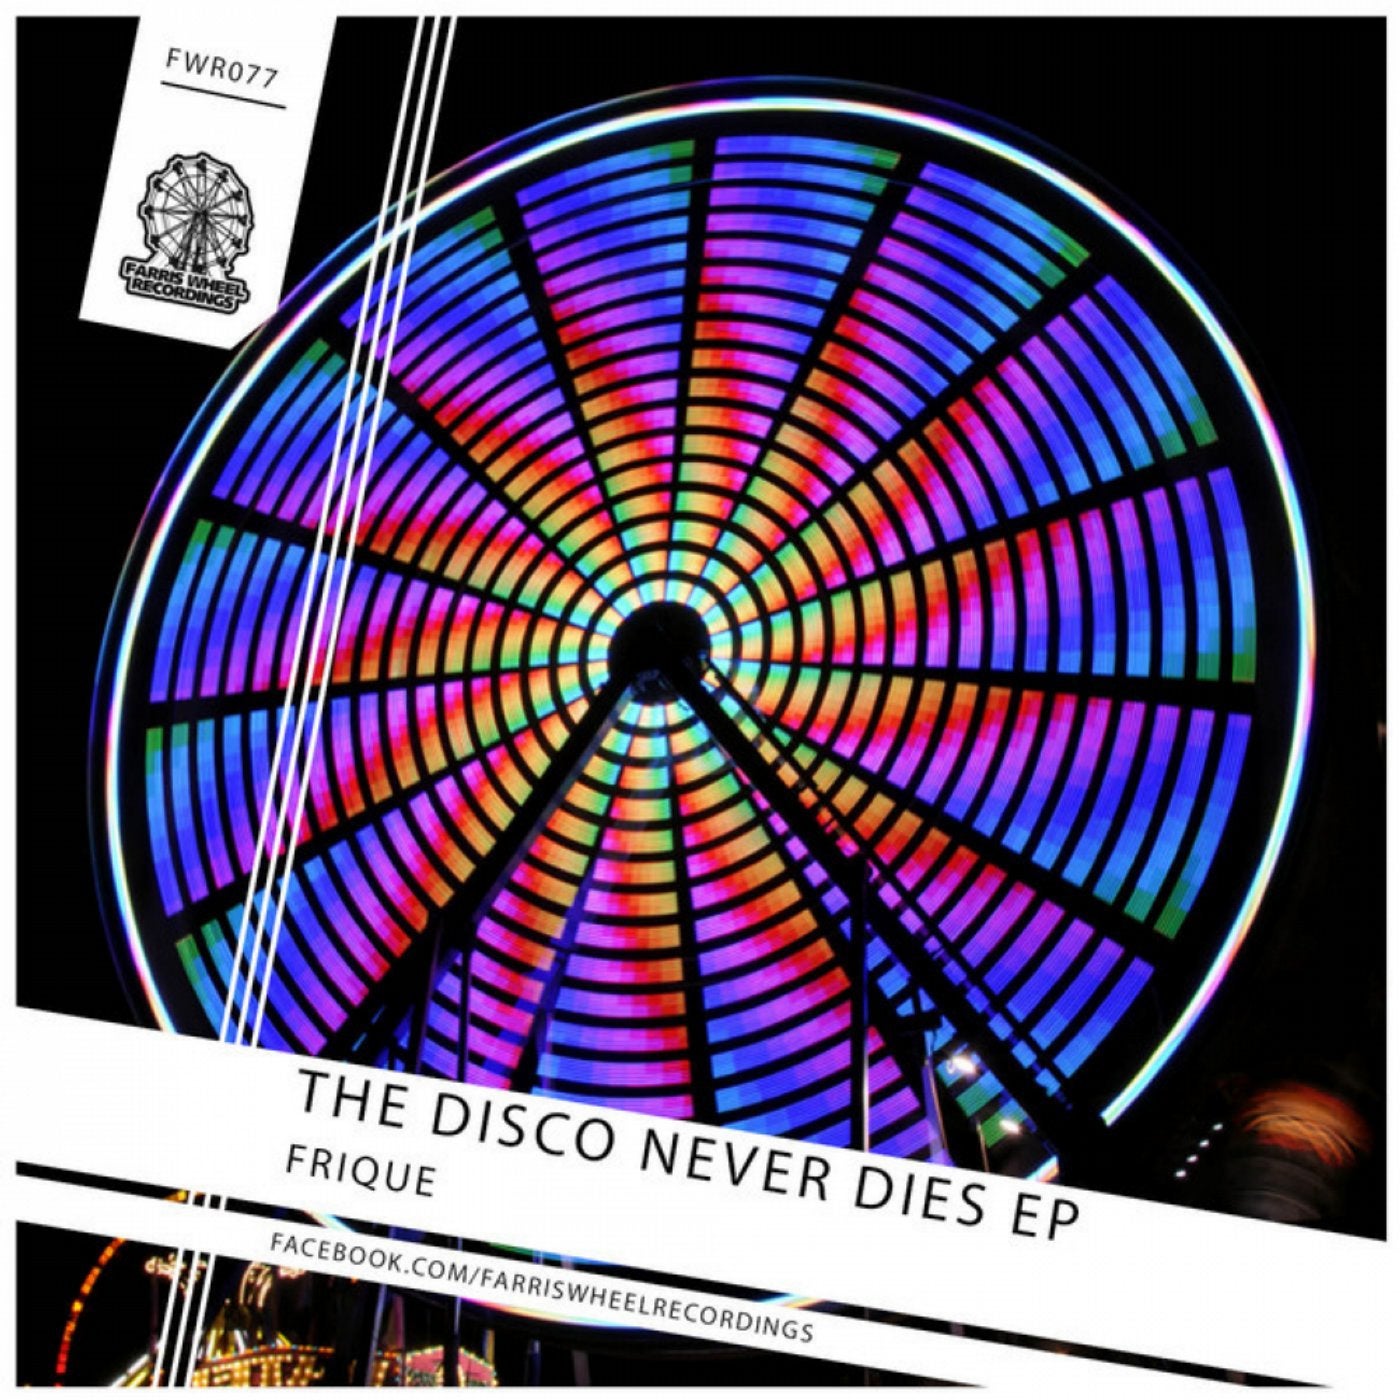 The Disco Never Dies EP